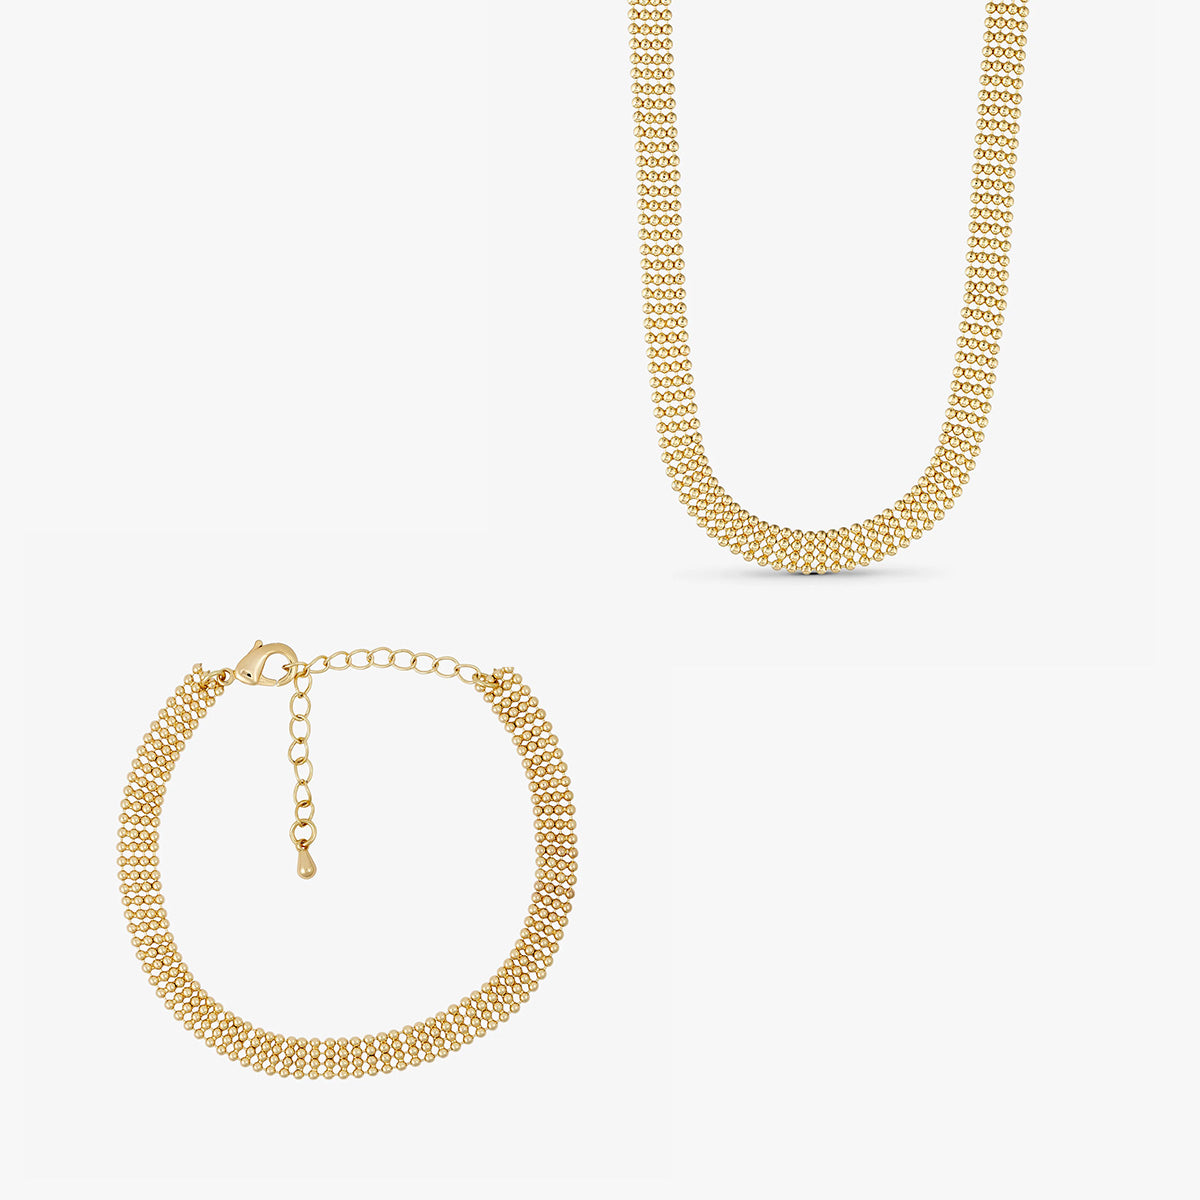 Jewelery set - Eden Necklace / Eden Bracelet - 18 carat gold plated